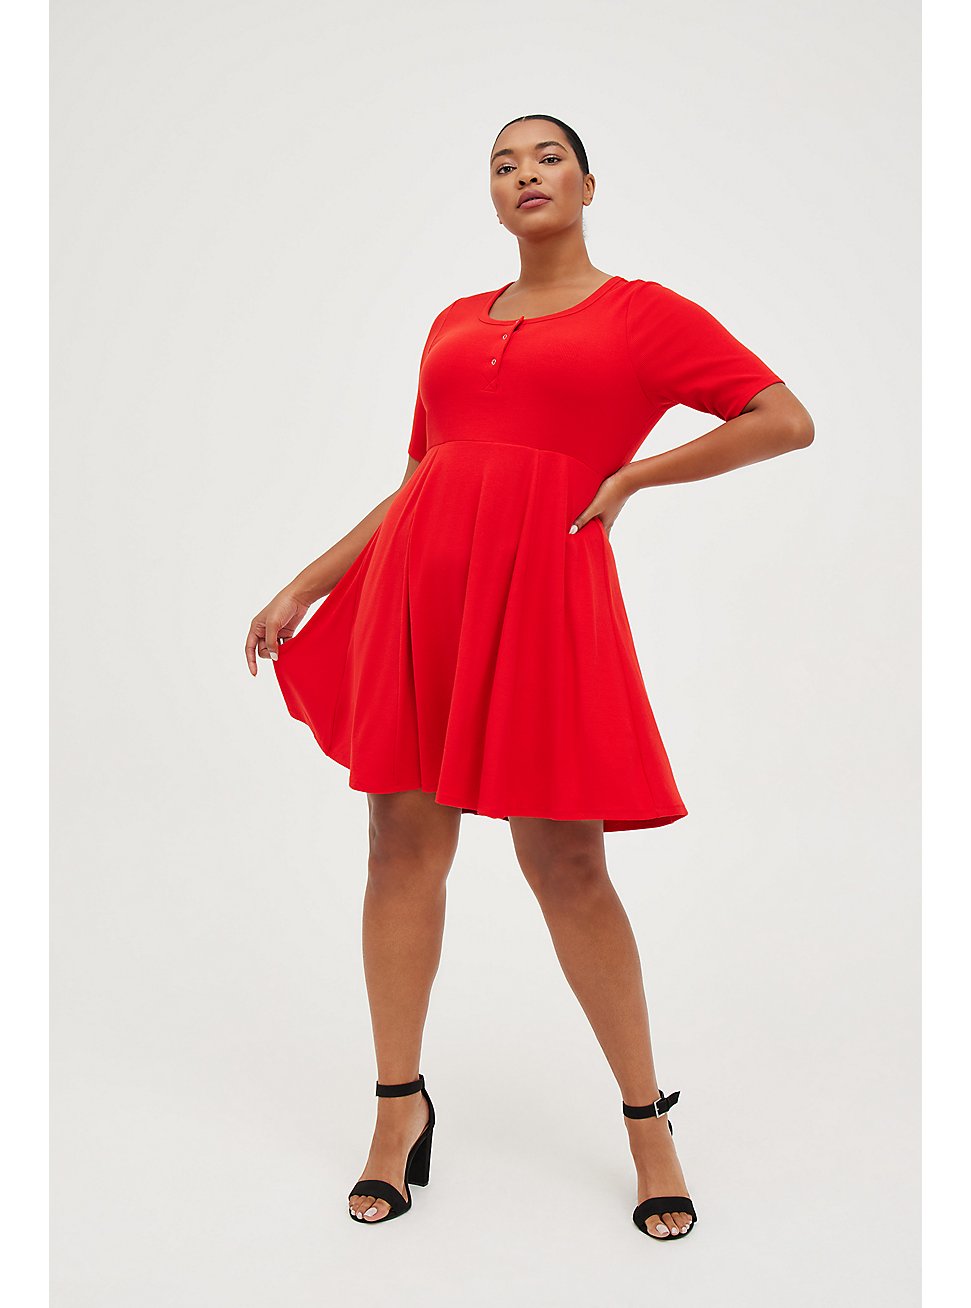 Plus Size Ribbed Skater Dress - Red, RED, hi-res